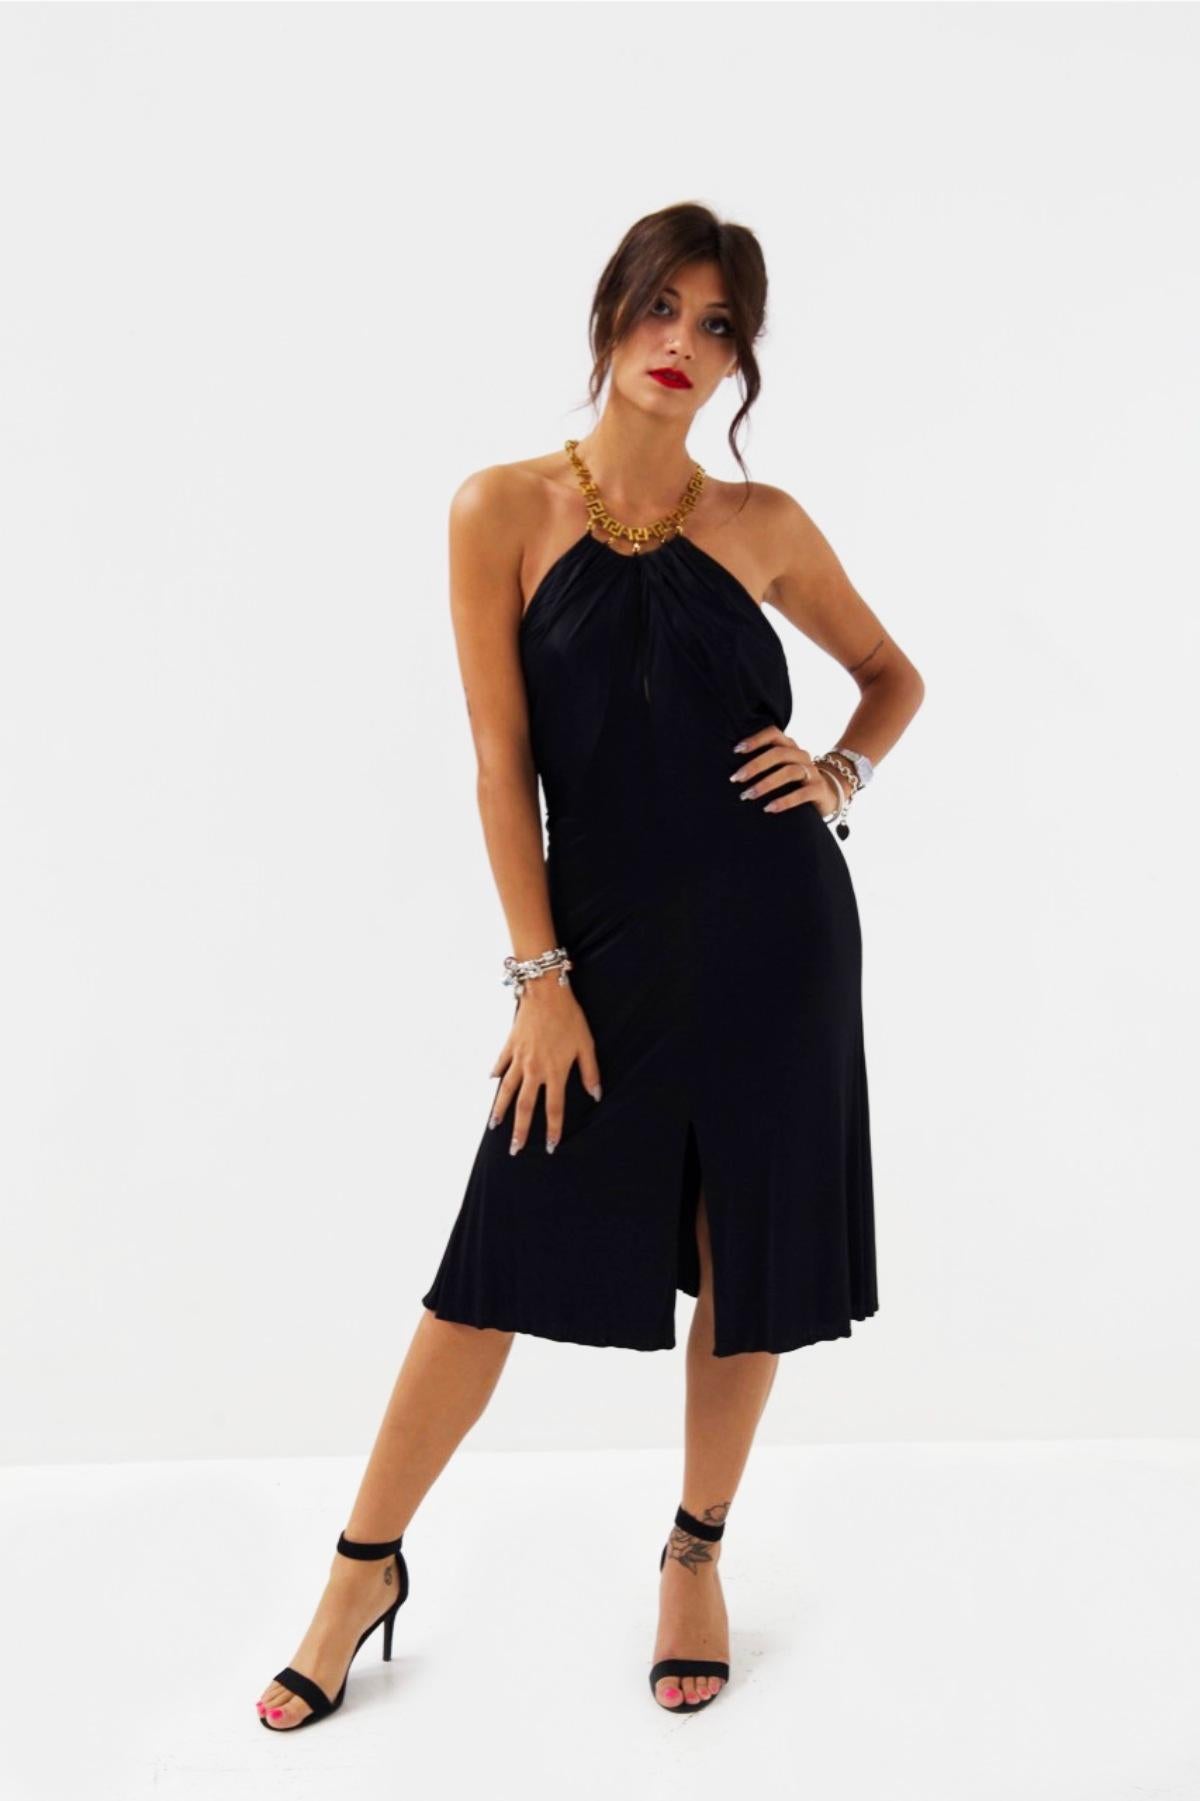 Gianni Versace Black Medusa Evening Dress For Sale 6